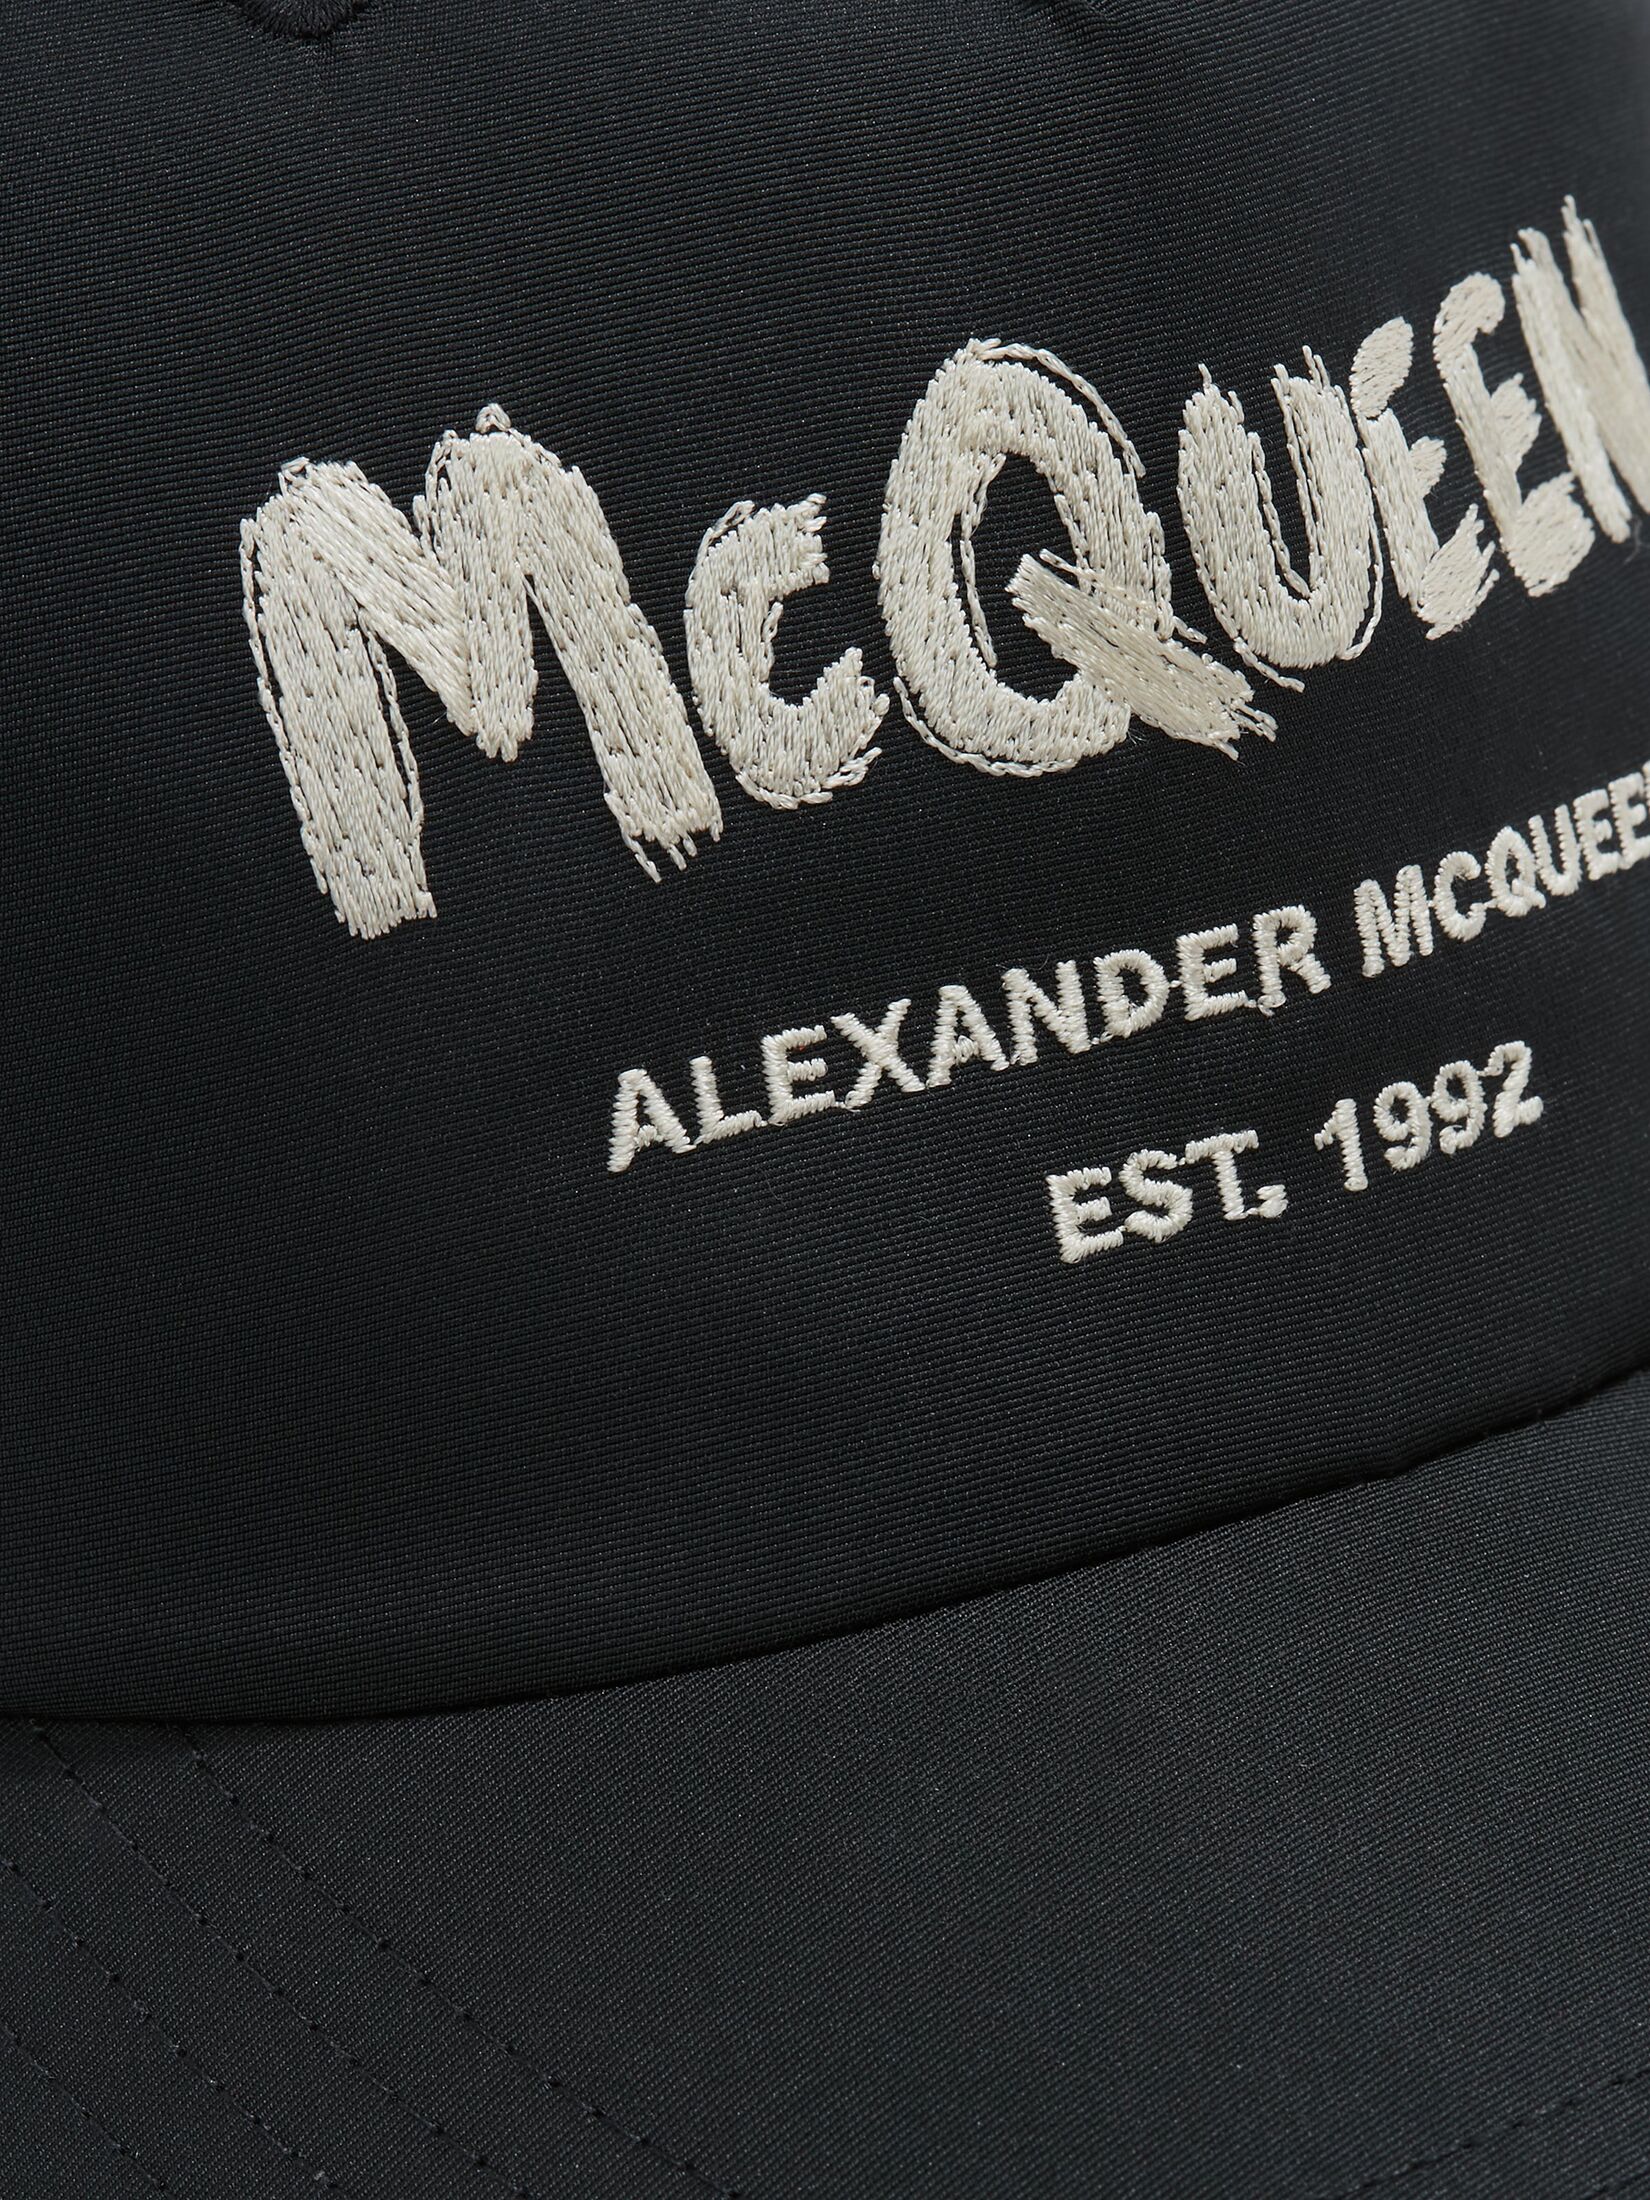 McQueen Graffiti Baseball Cap